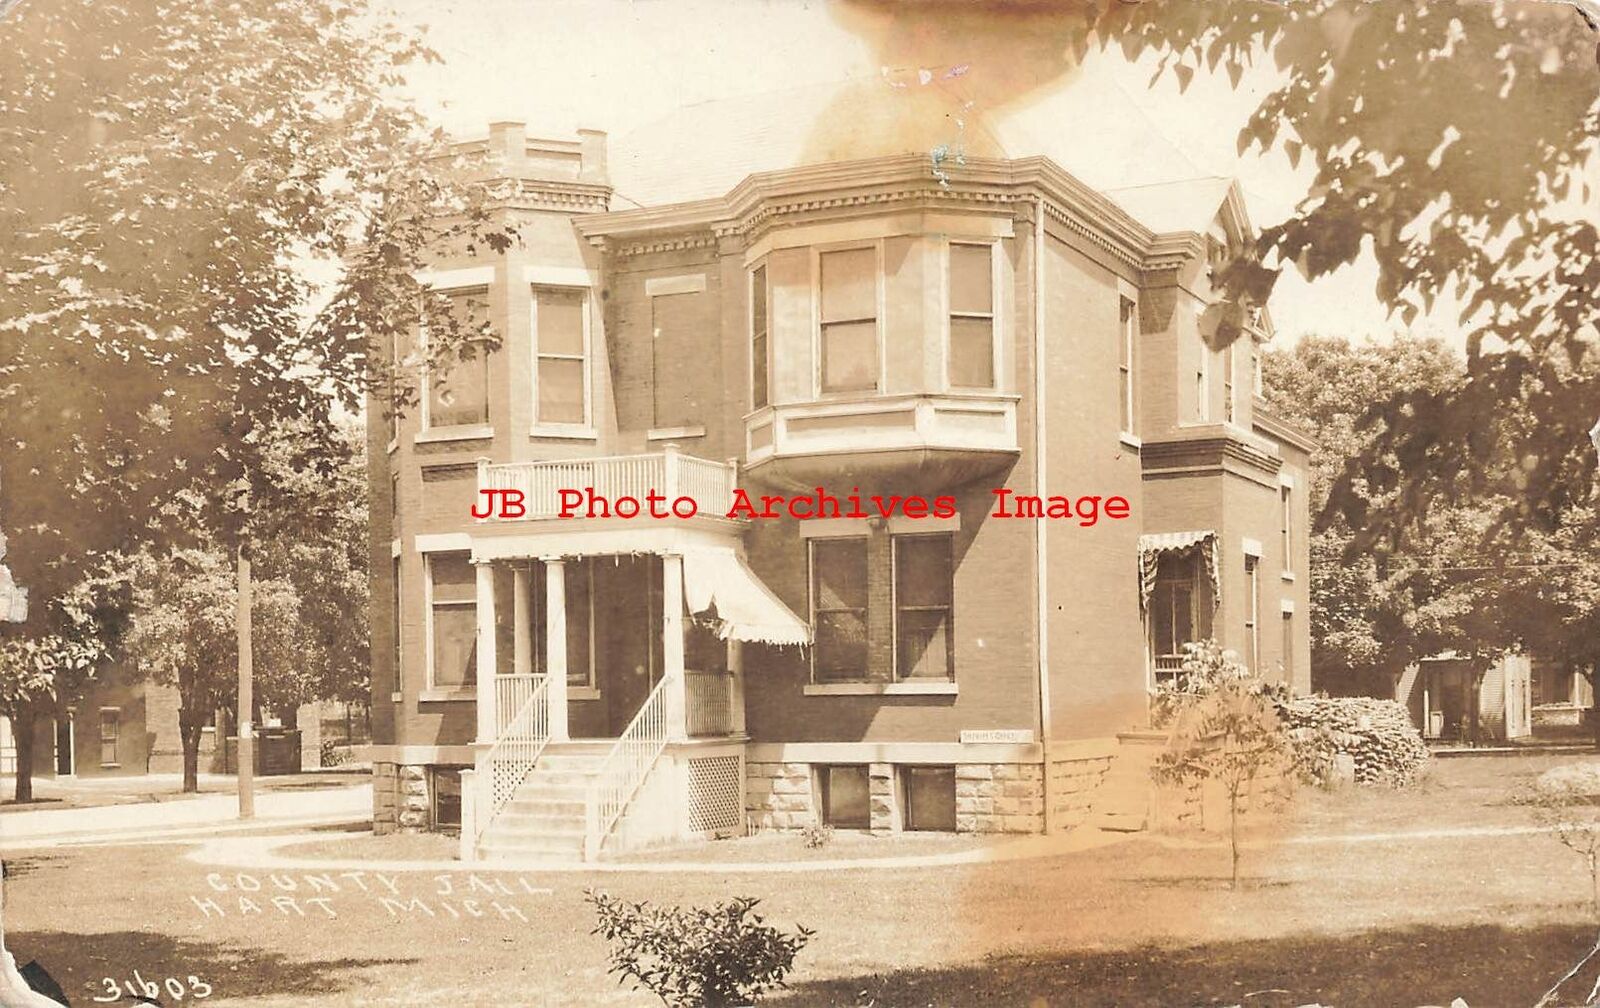 MI, Hart, Michigan, RPPC, County Jail, Exterior View, 1917 PM, Photo No 31608